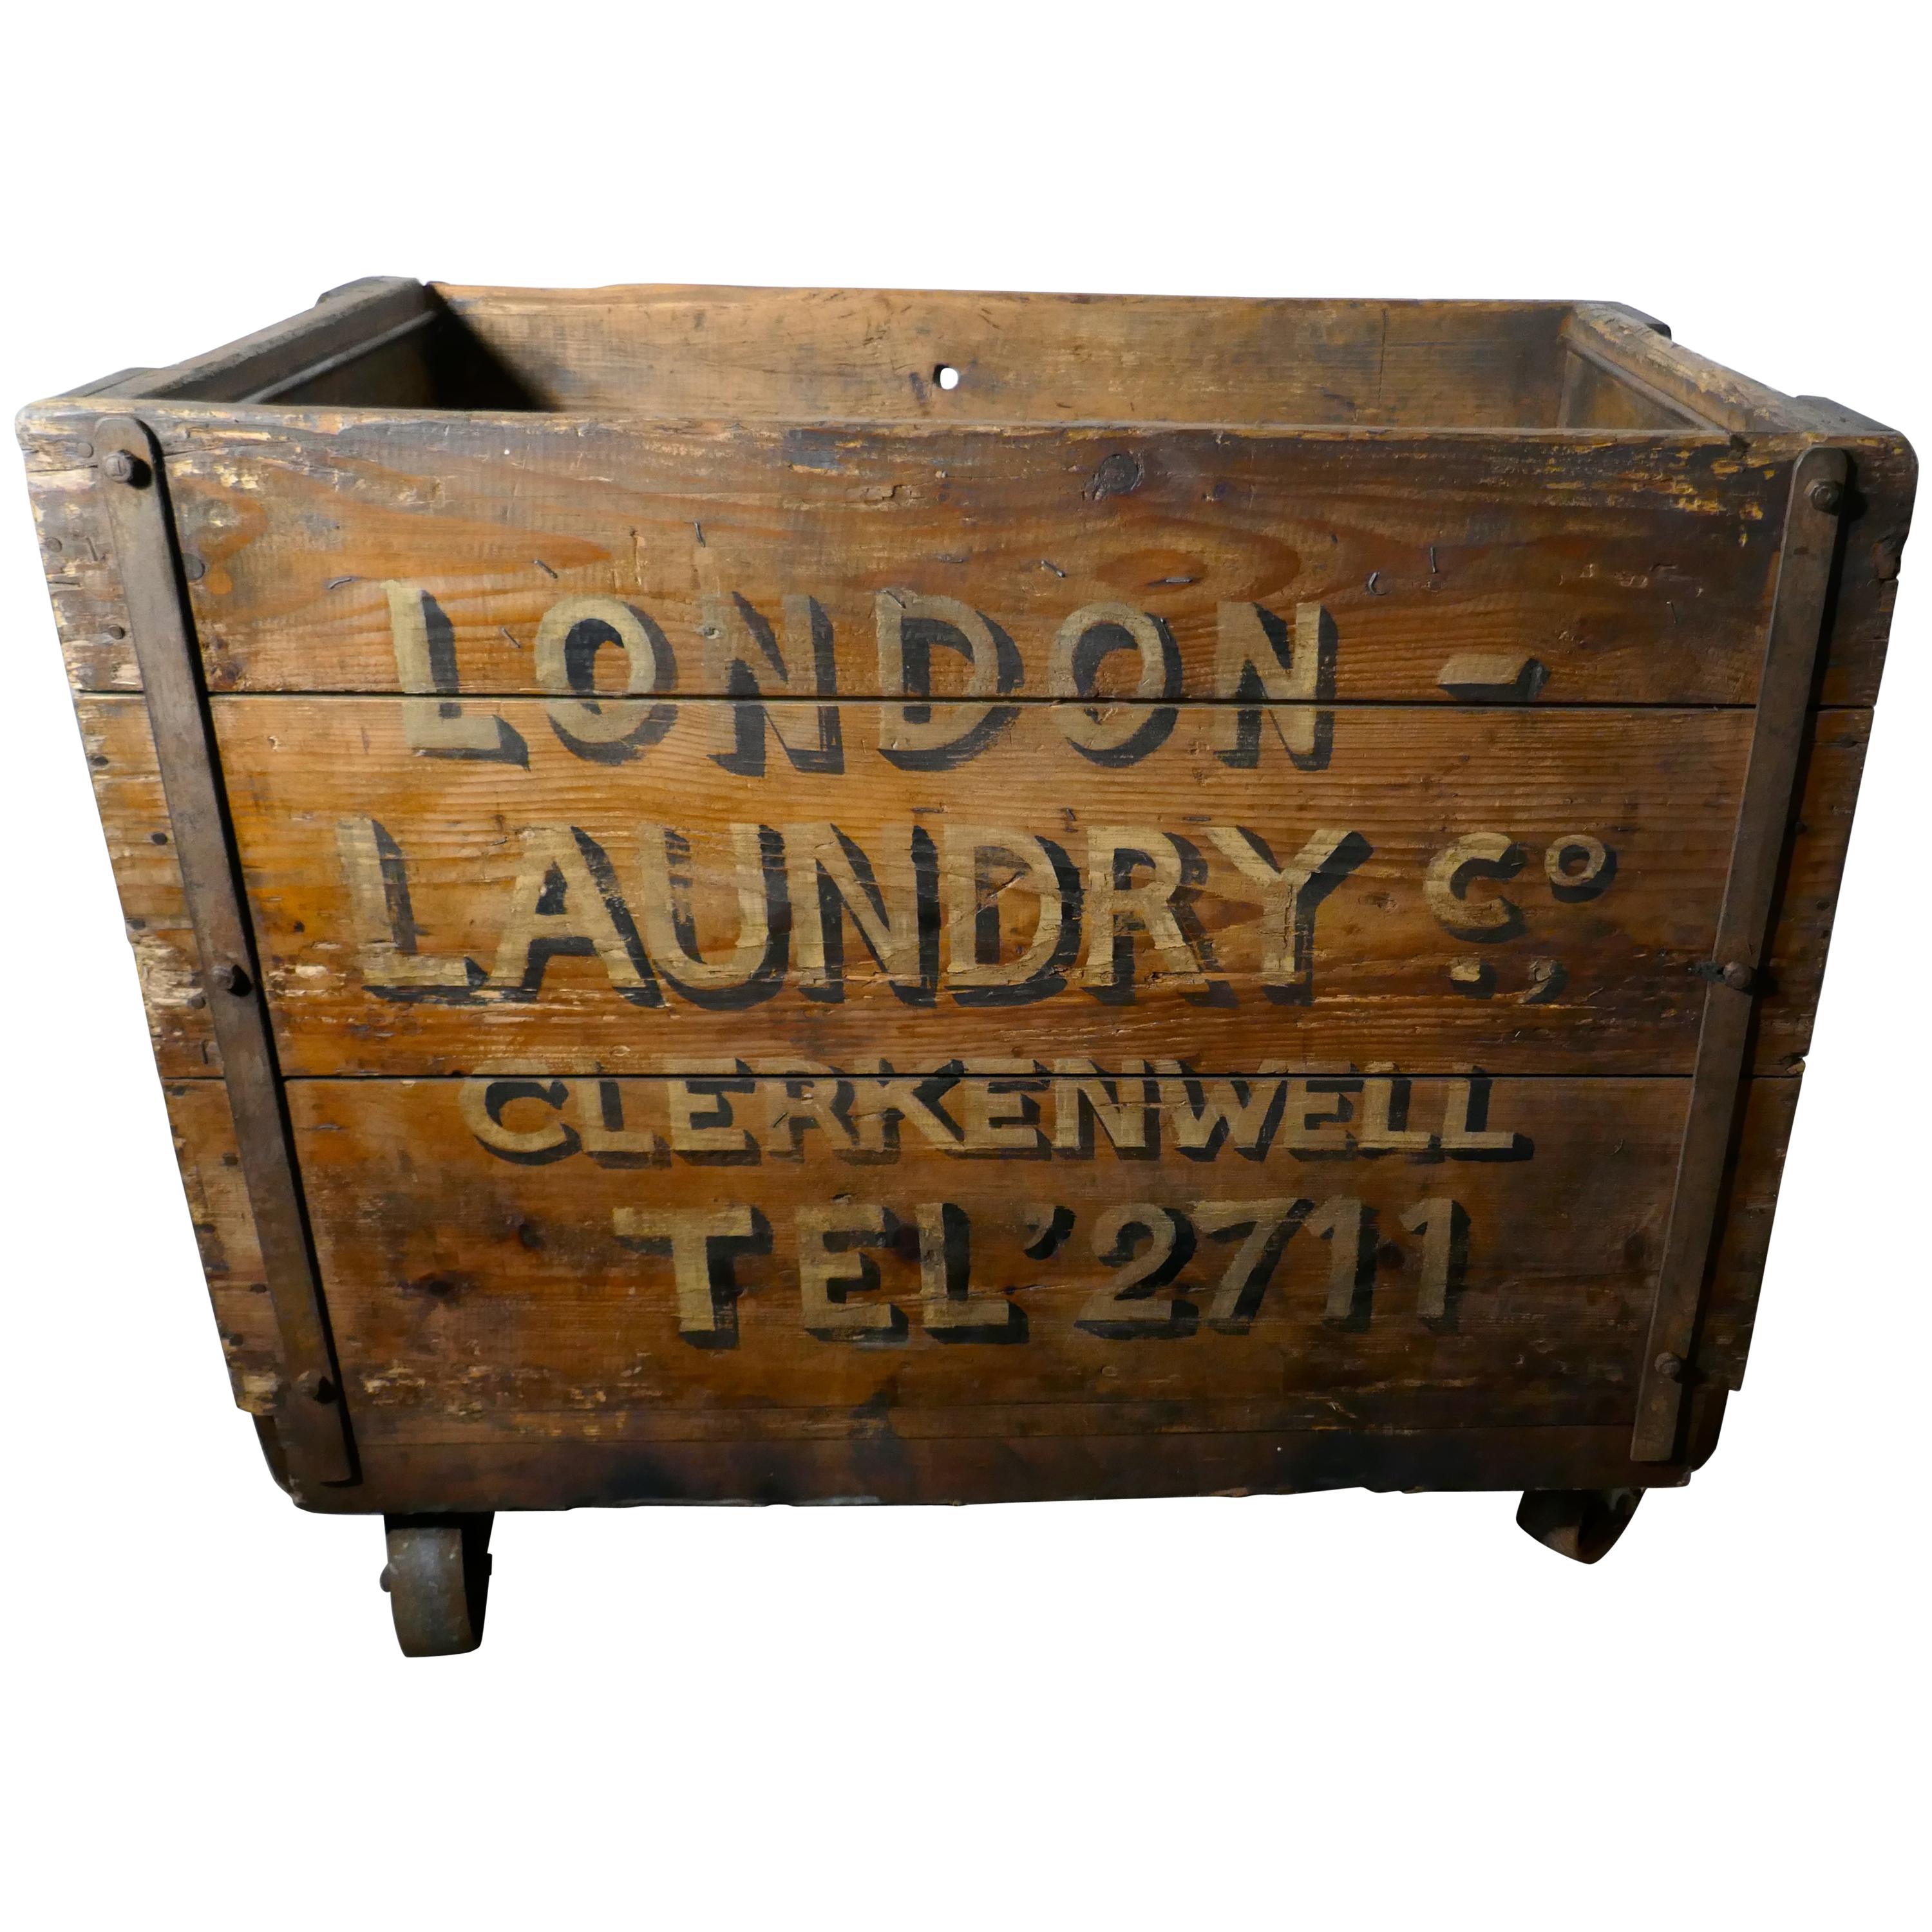 London Wooden Hotel Laundry Trolley Cart